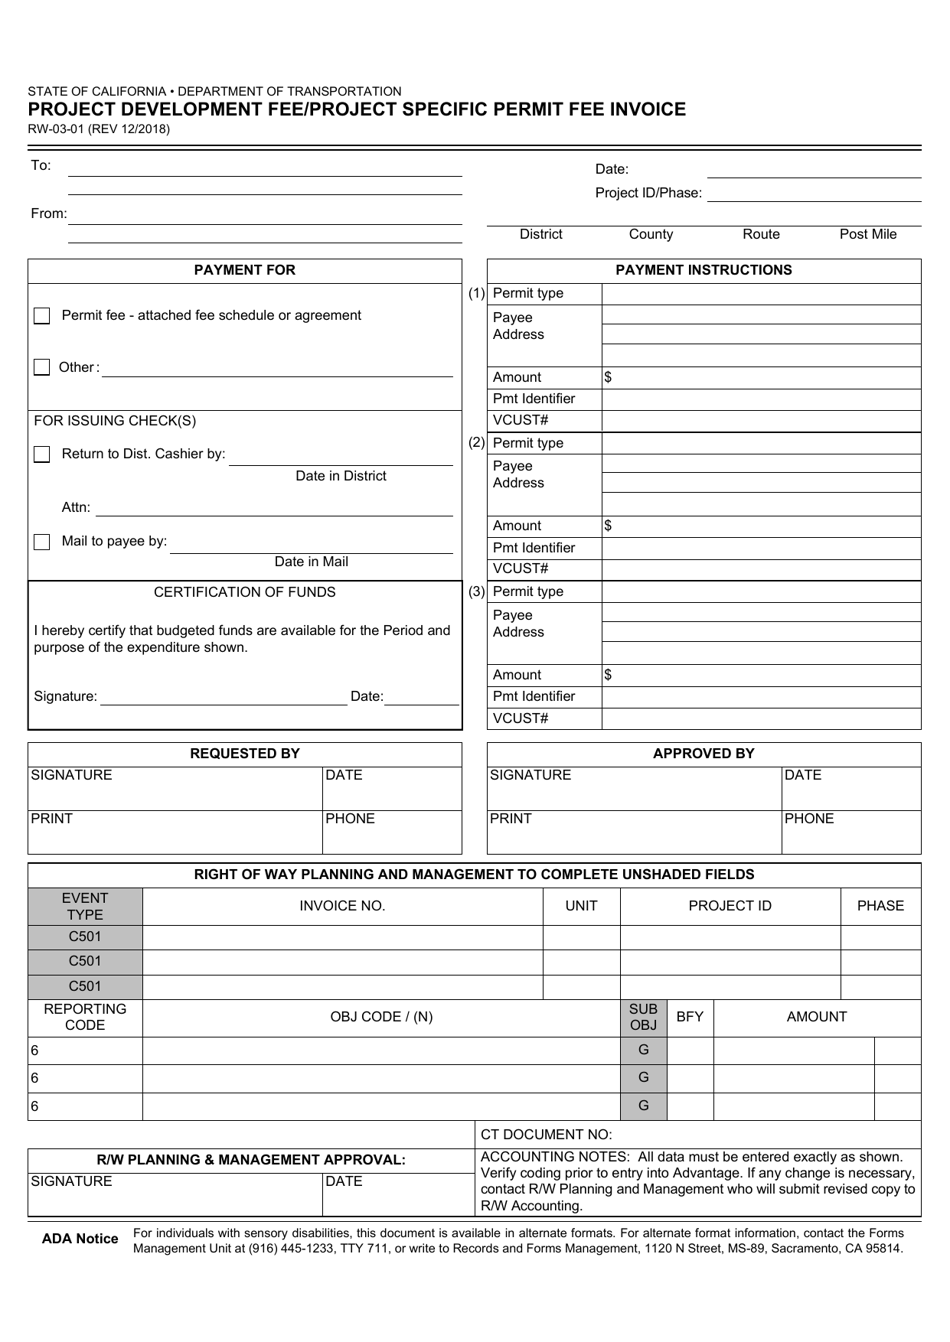 Form RW-03-01 Project Development Fee / Project Specific Permit Fee Invoice - California, Page 1